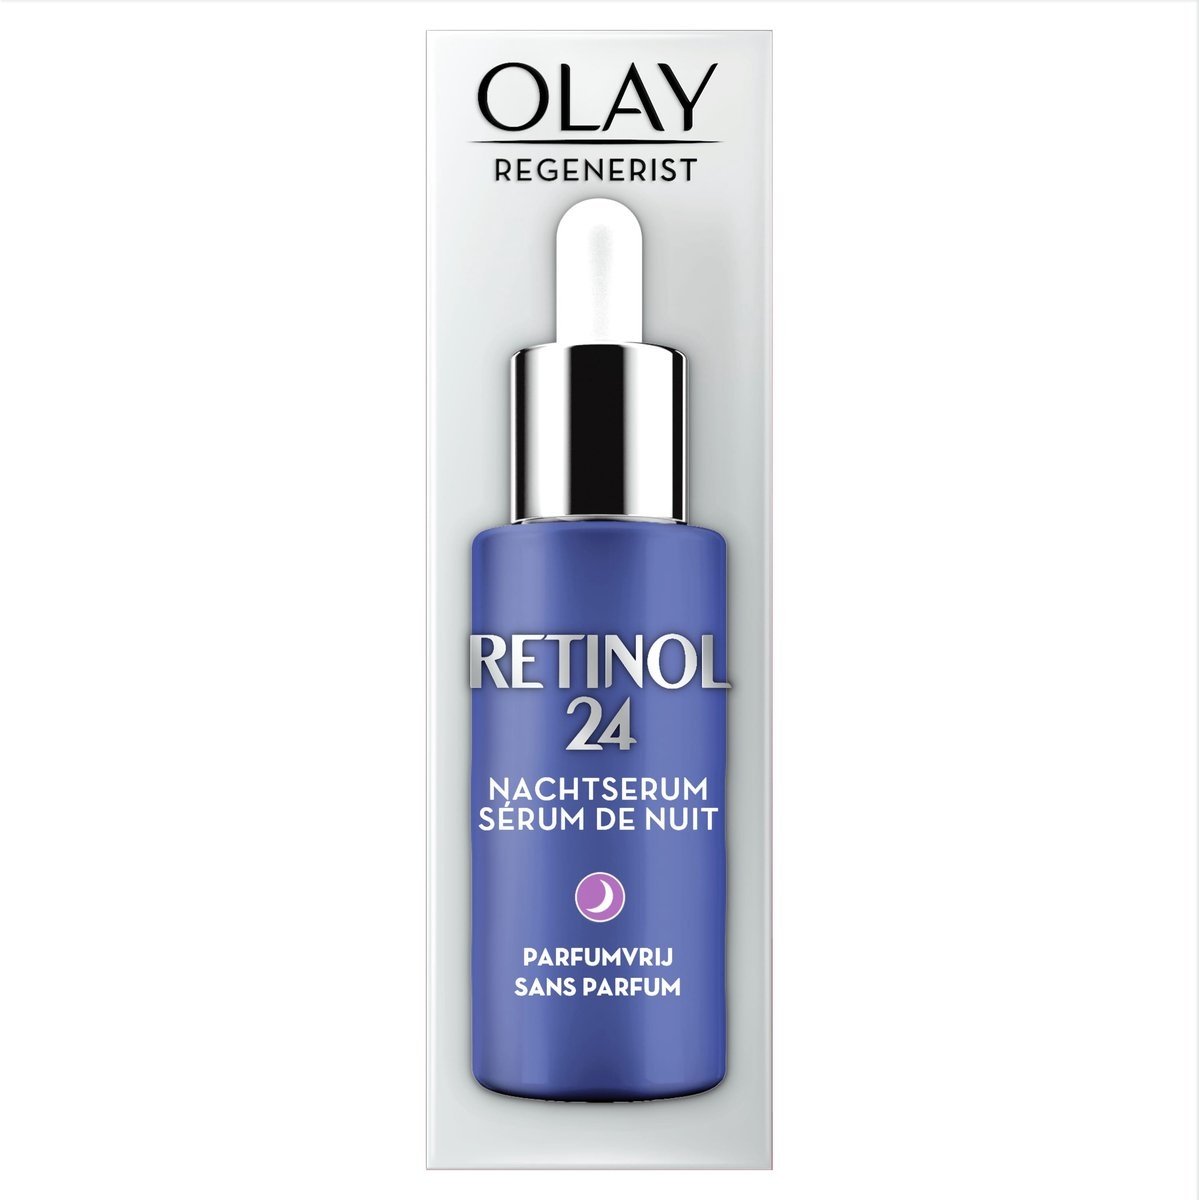 Olay Retinol24 - Nachtserum - Parfumvrij Met Retinol En Vitamine B3 - 40 ml - Verpakking beschadigd